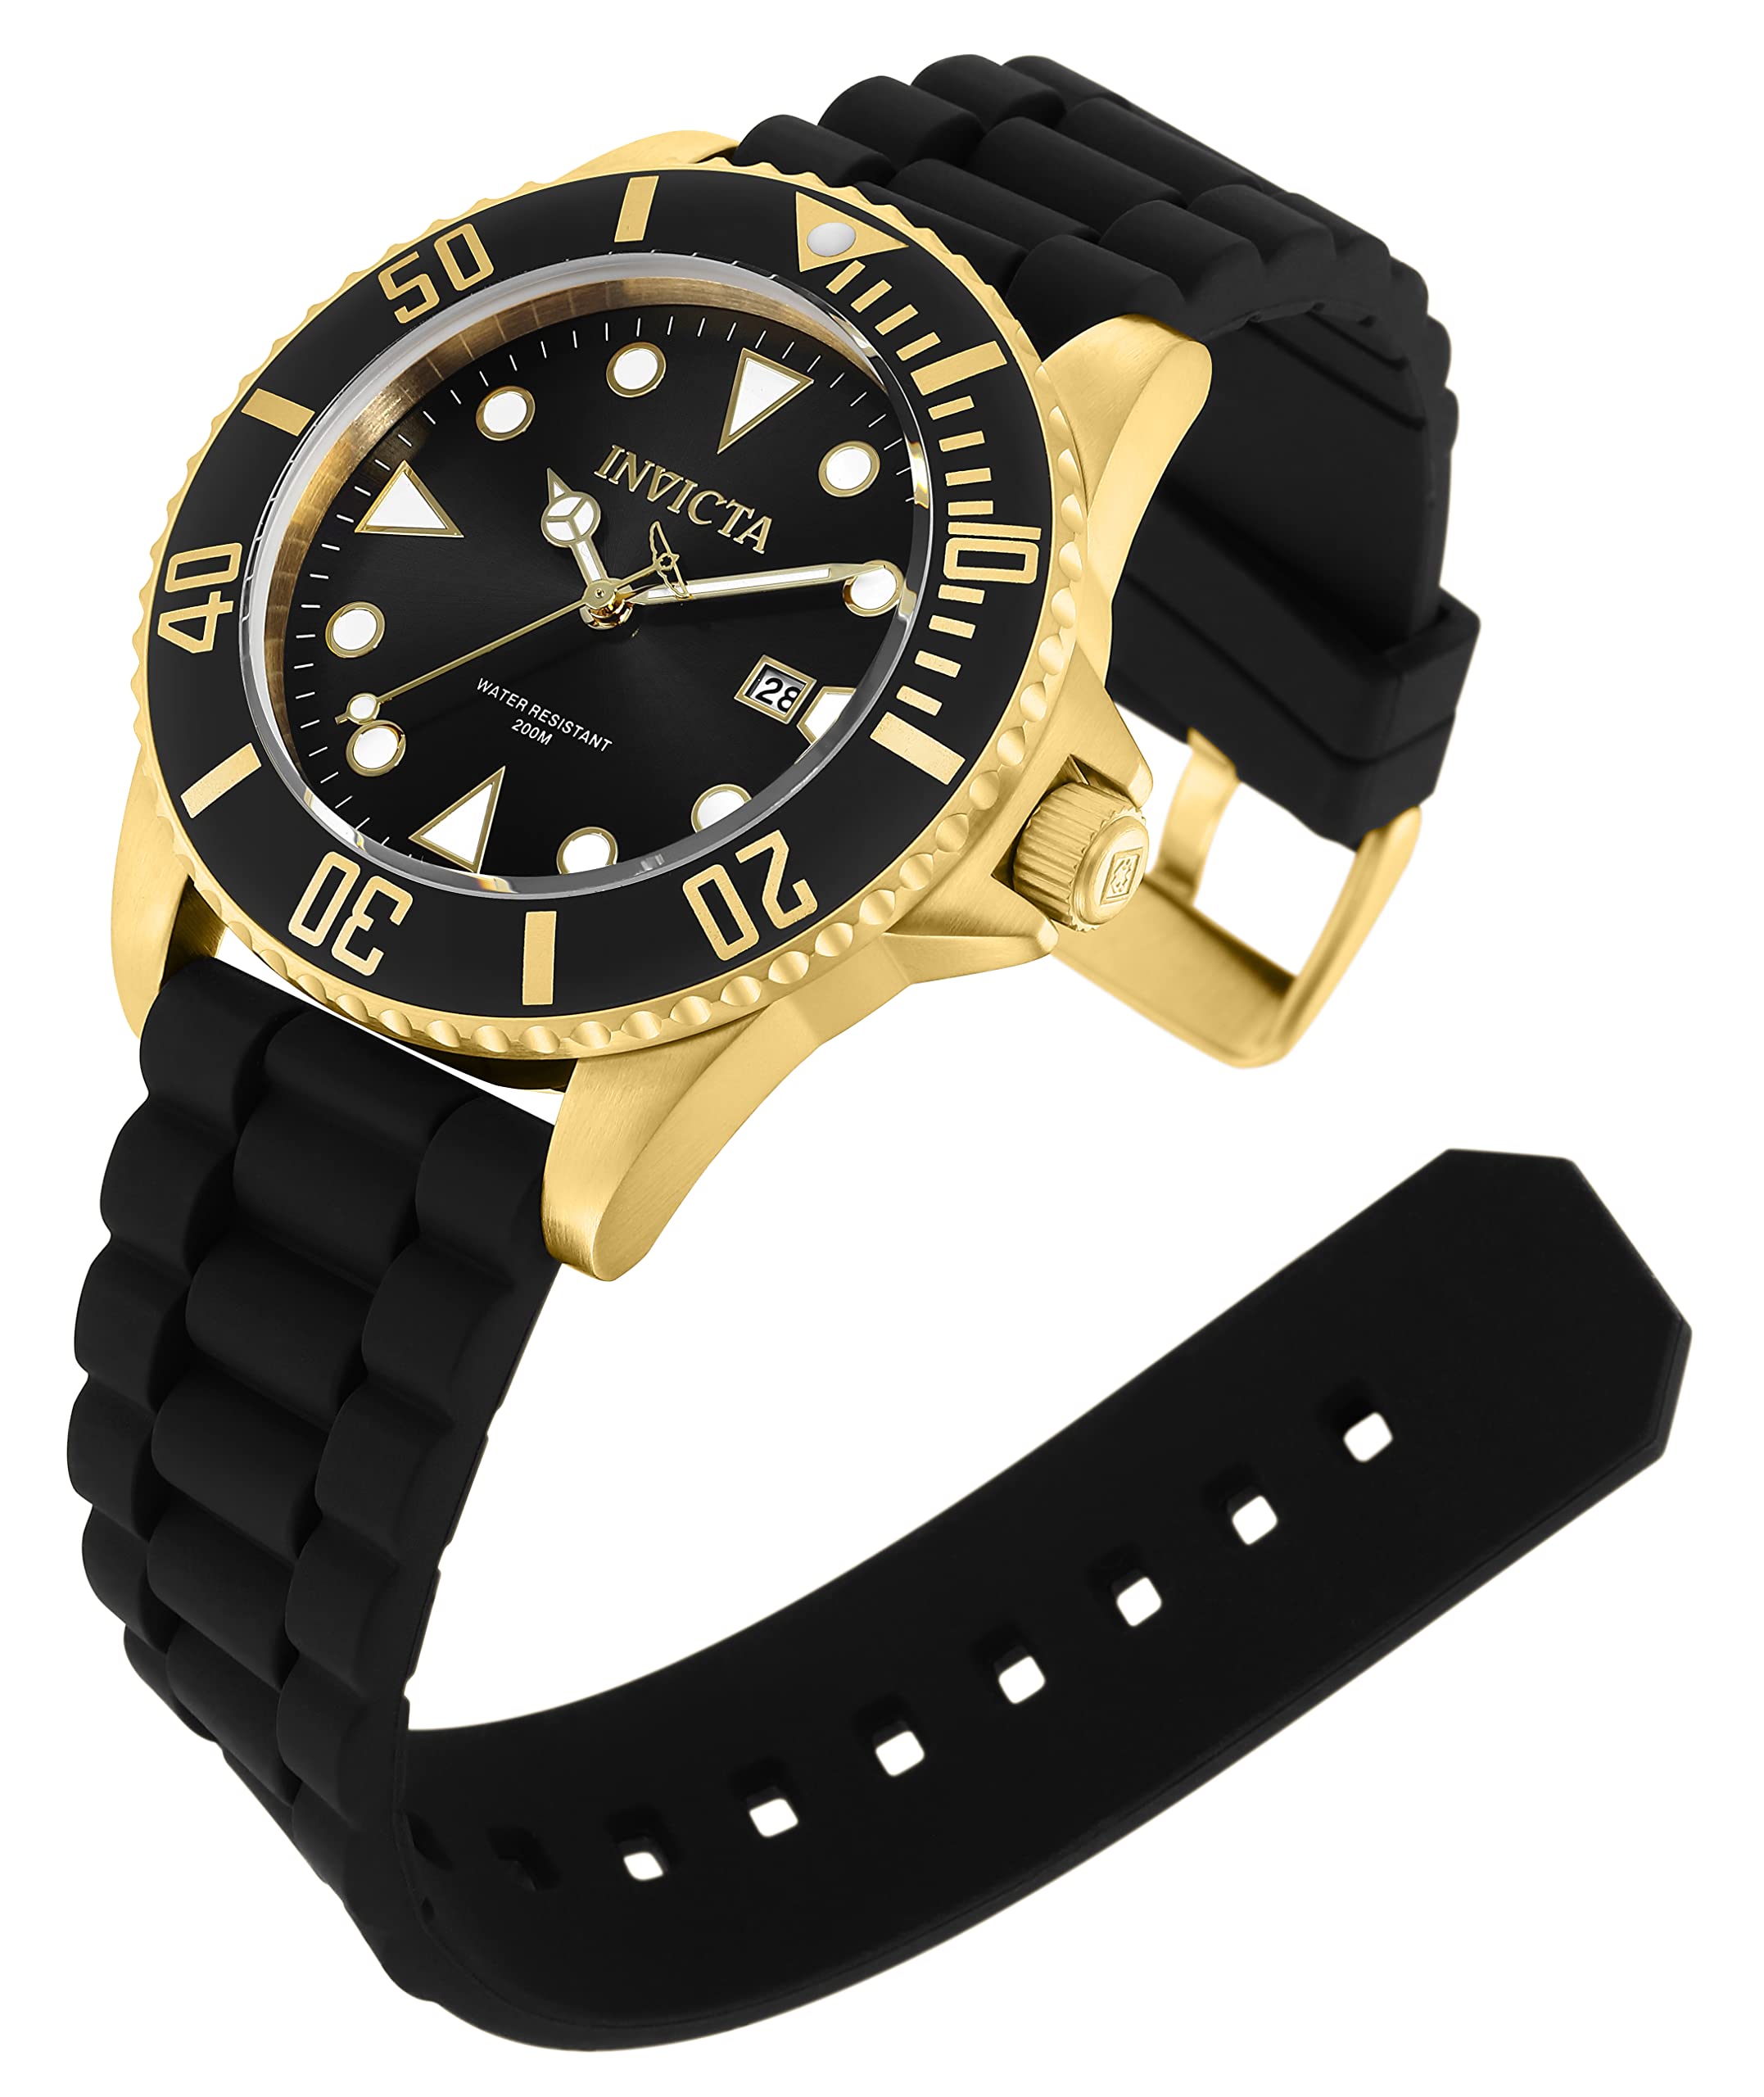 Invicta Men's 90303 Pro Diver Analog Display Quartz Black Watch